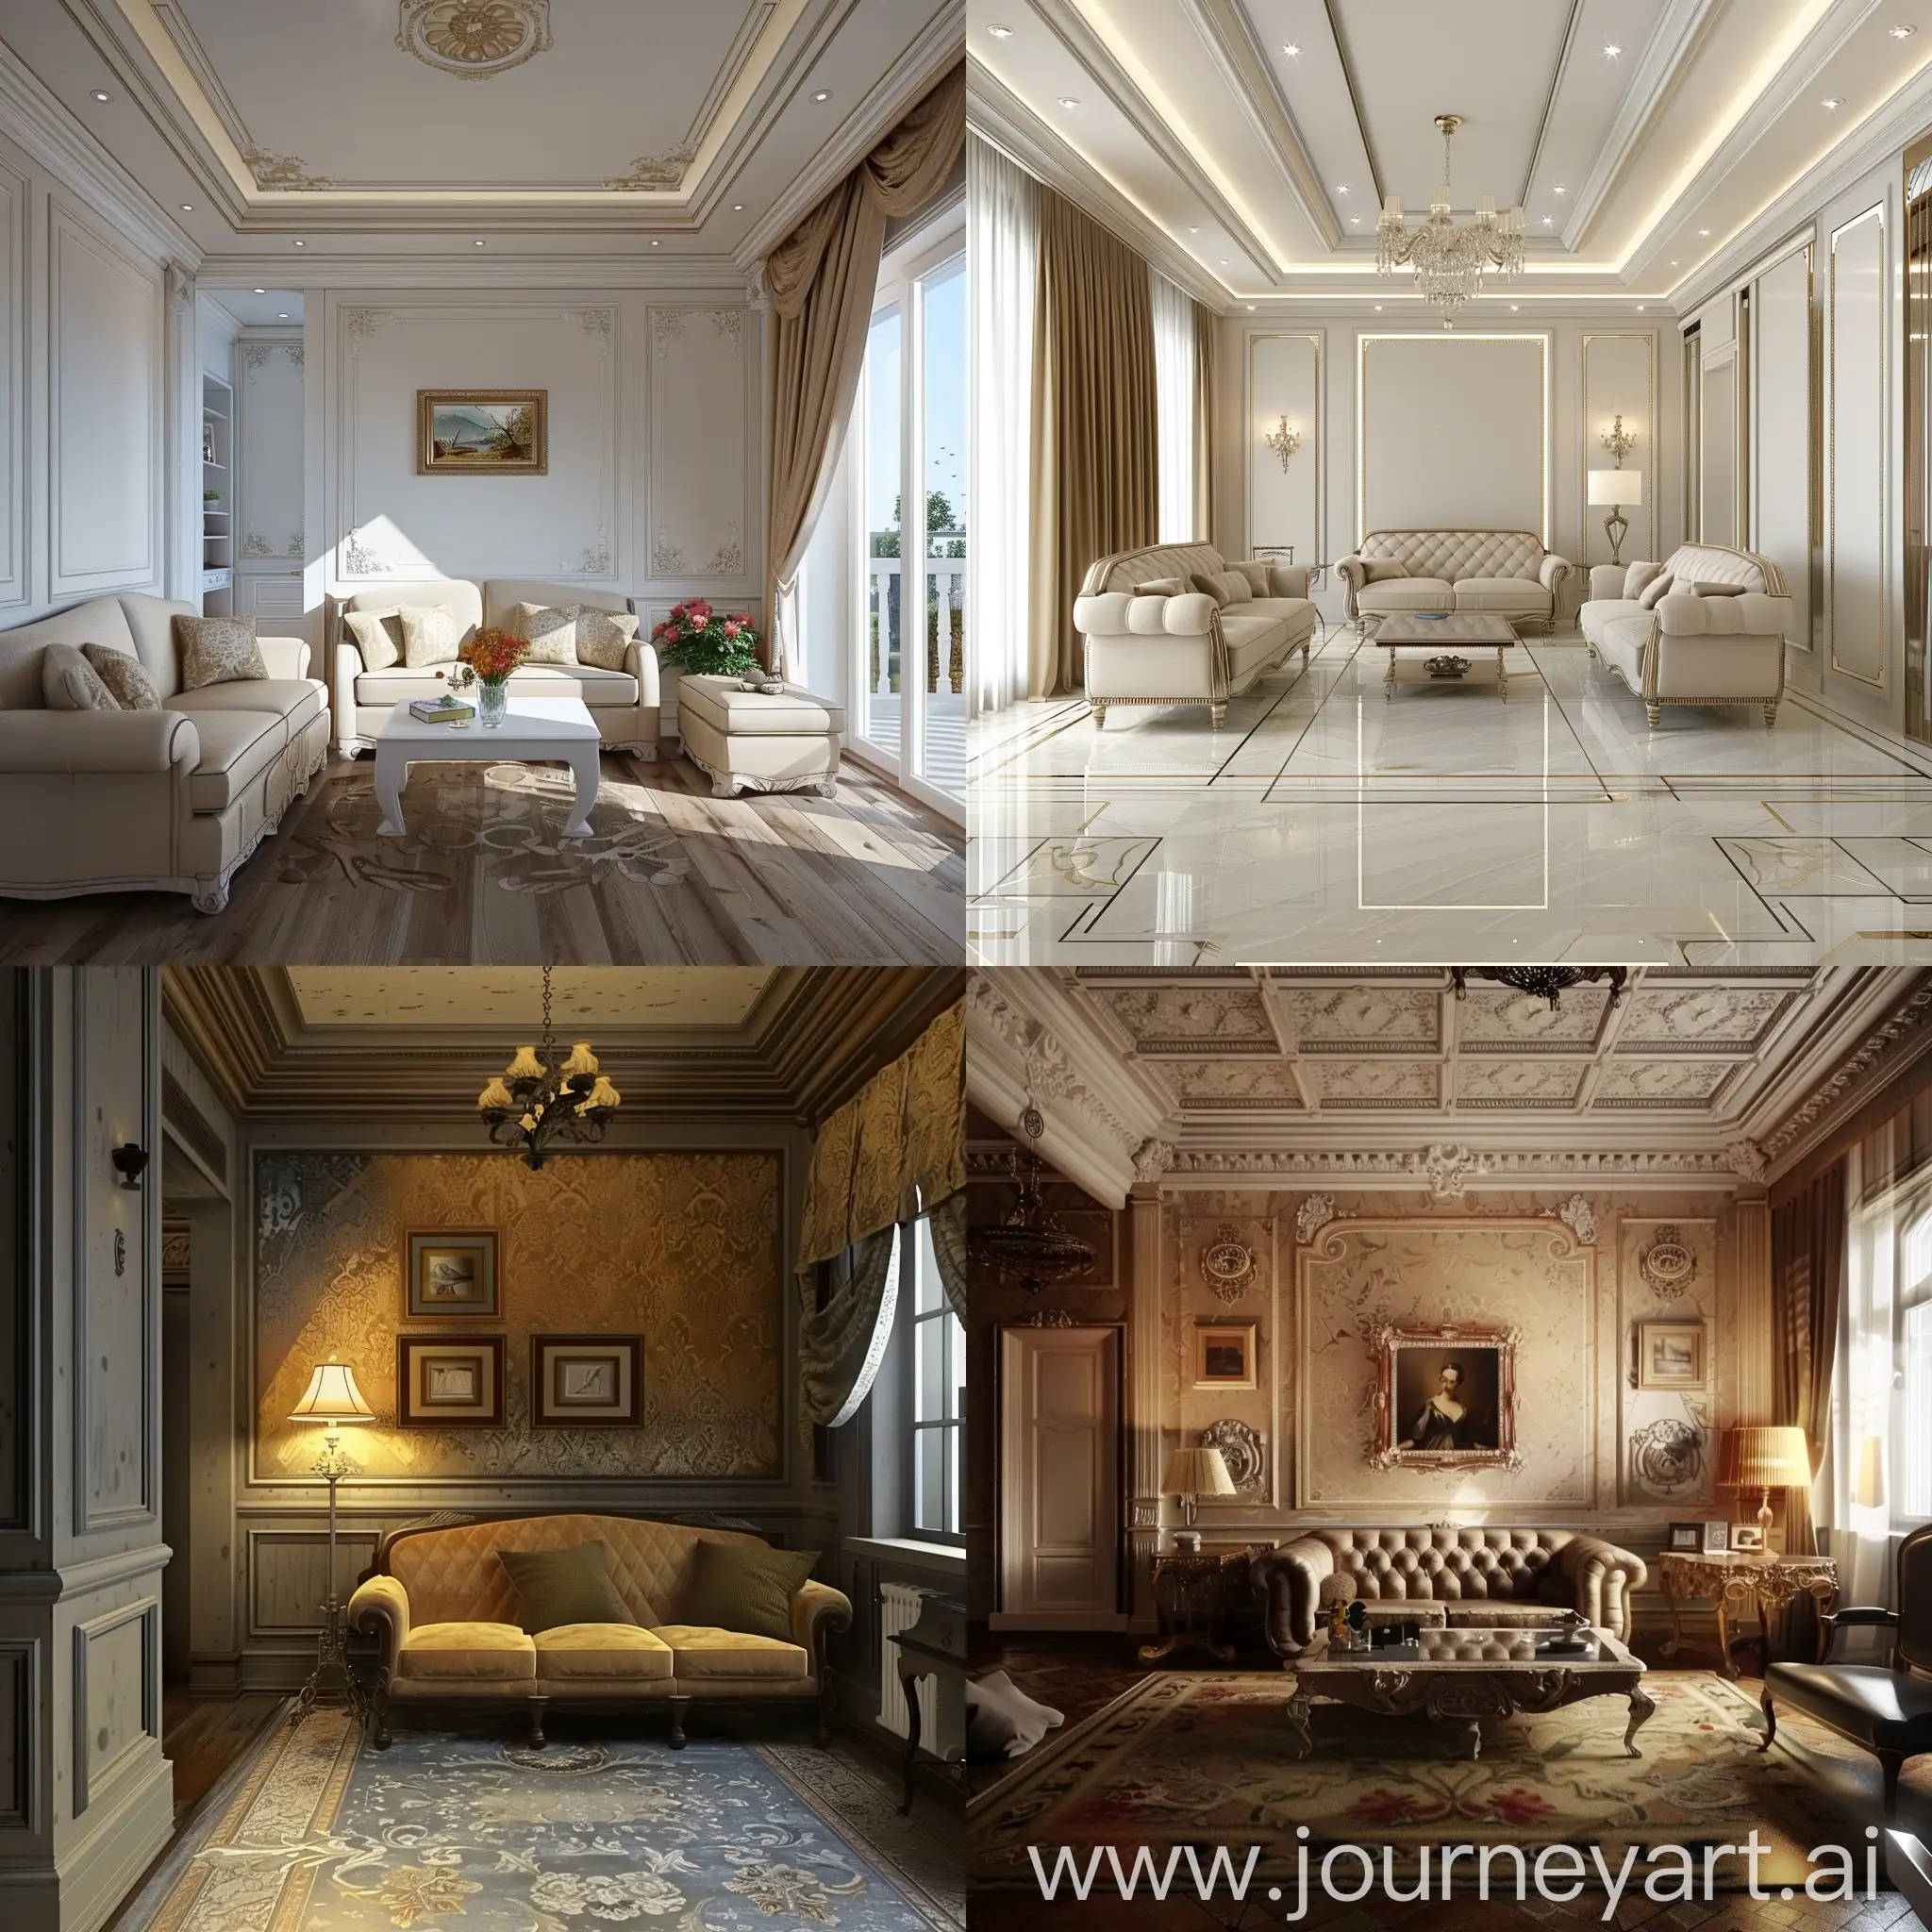 Warm-and-Inviting-Realistic-Room-Interior-with-Unique-Decor-Image-20910